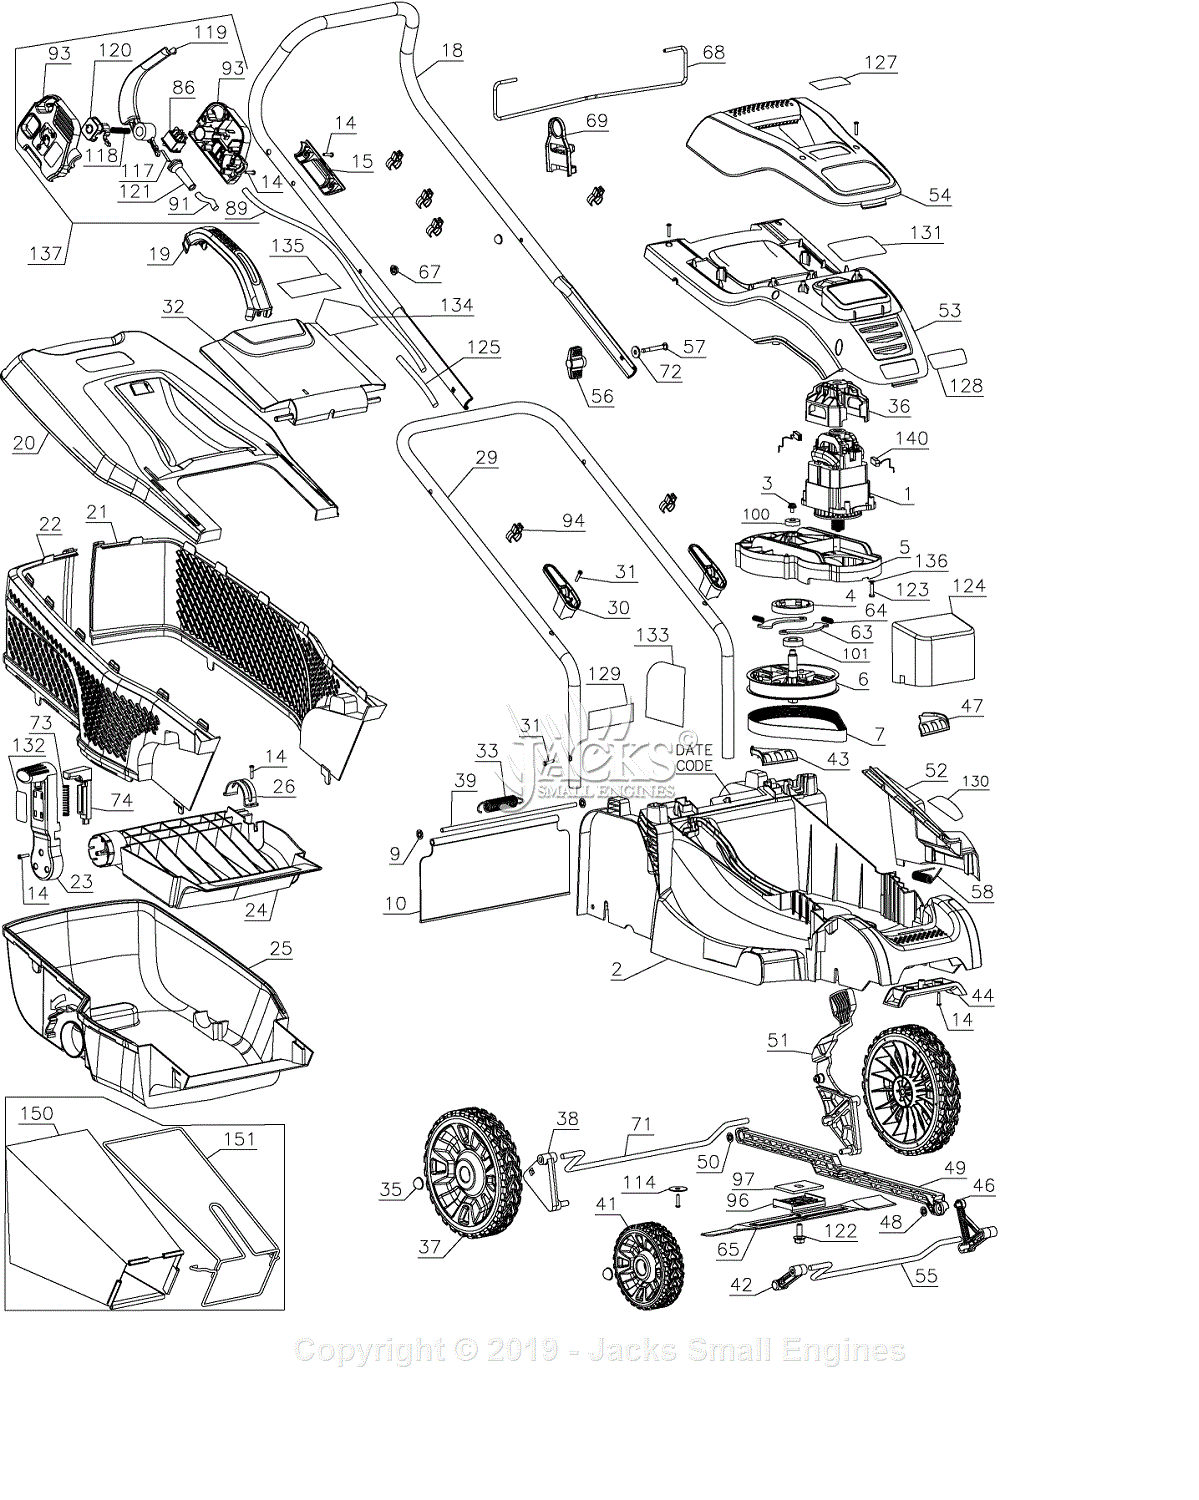 https://az417944.vo.msecnd.net/diagrams/manufacturer/black-decker/lawn-mower/em1500-type-1/mower/diagram_2.gif